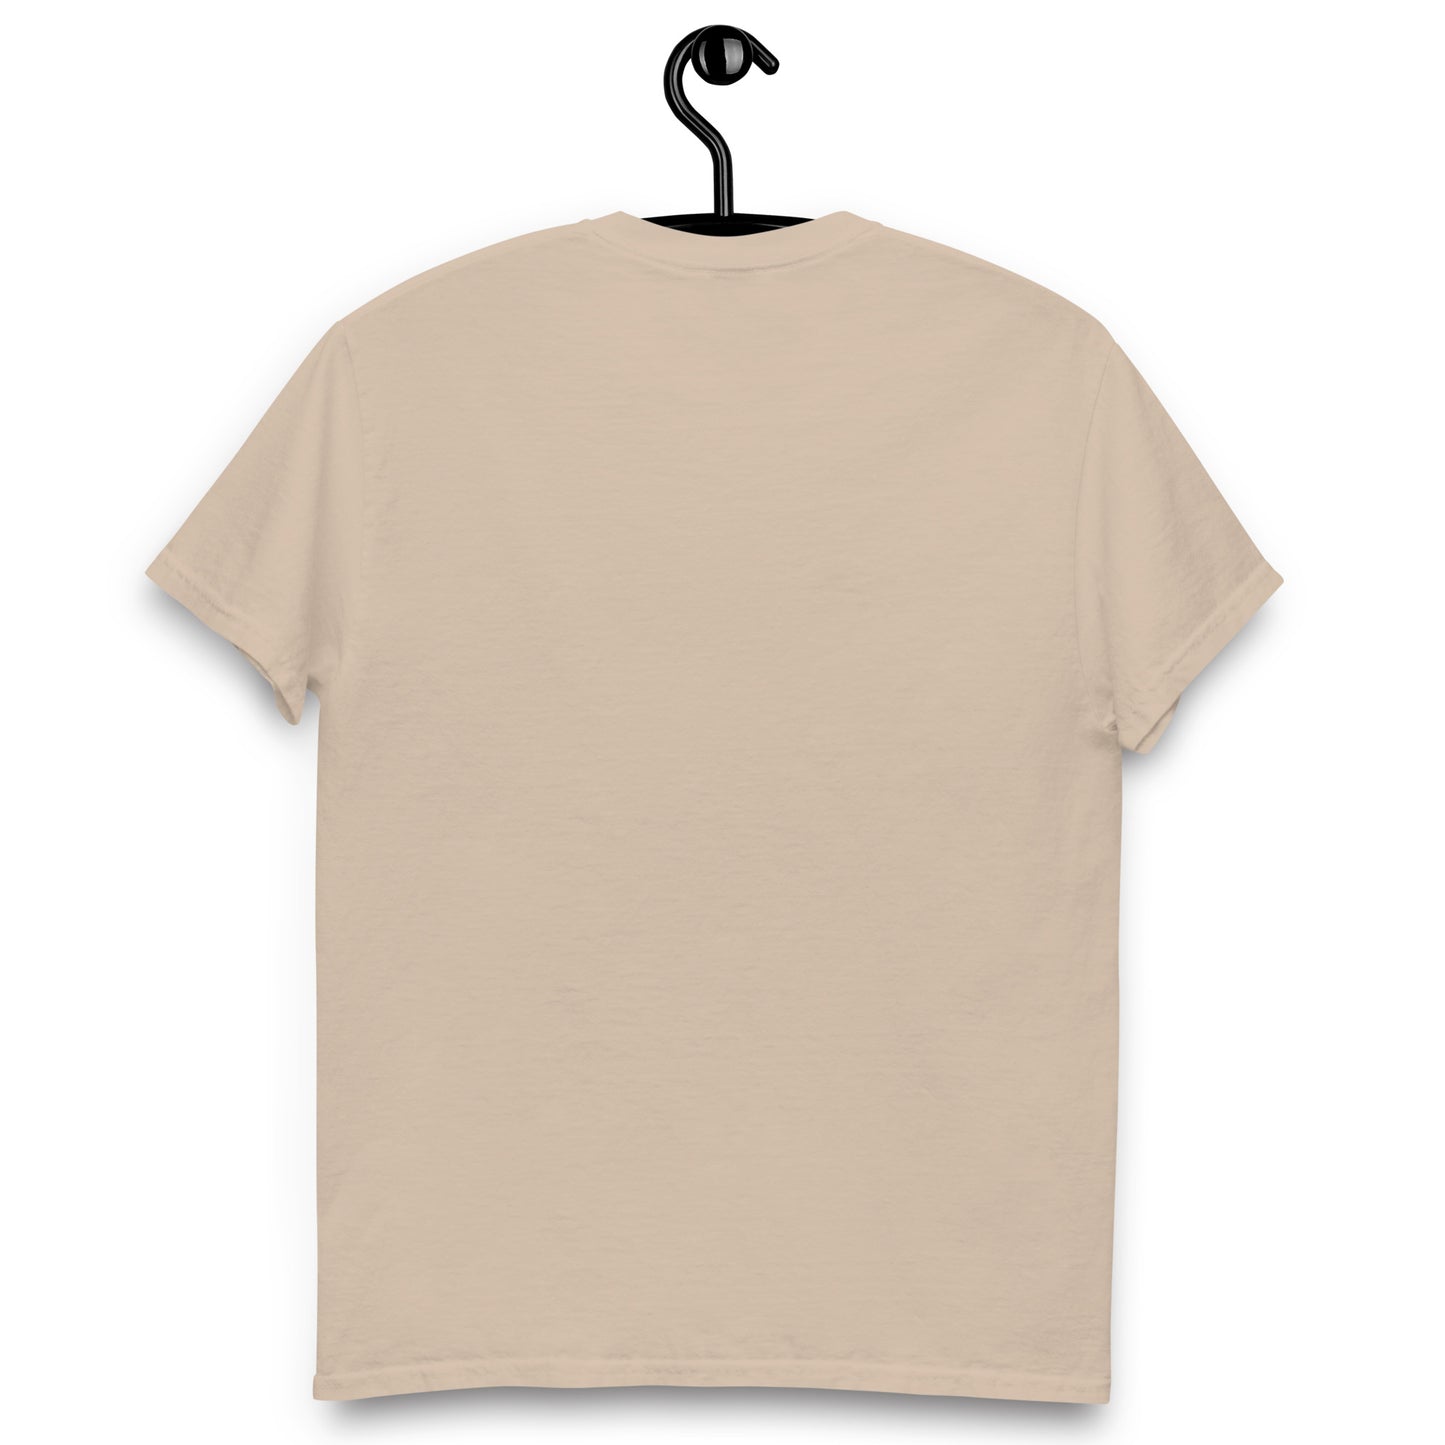 Unisex T-Shirt Cat